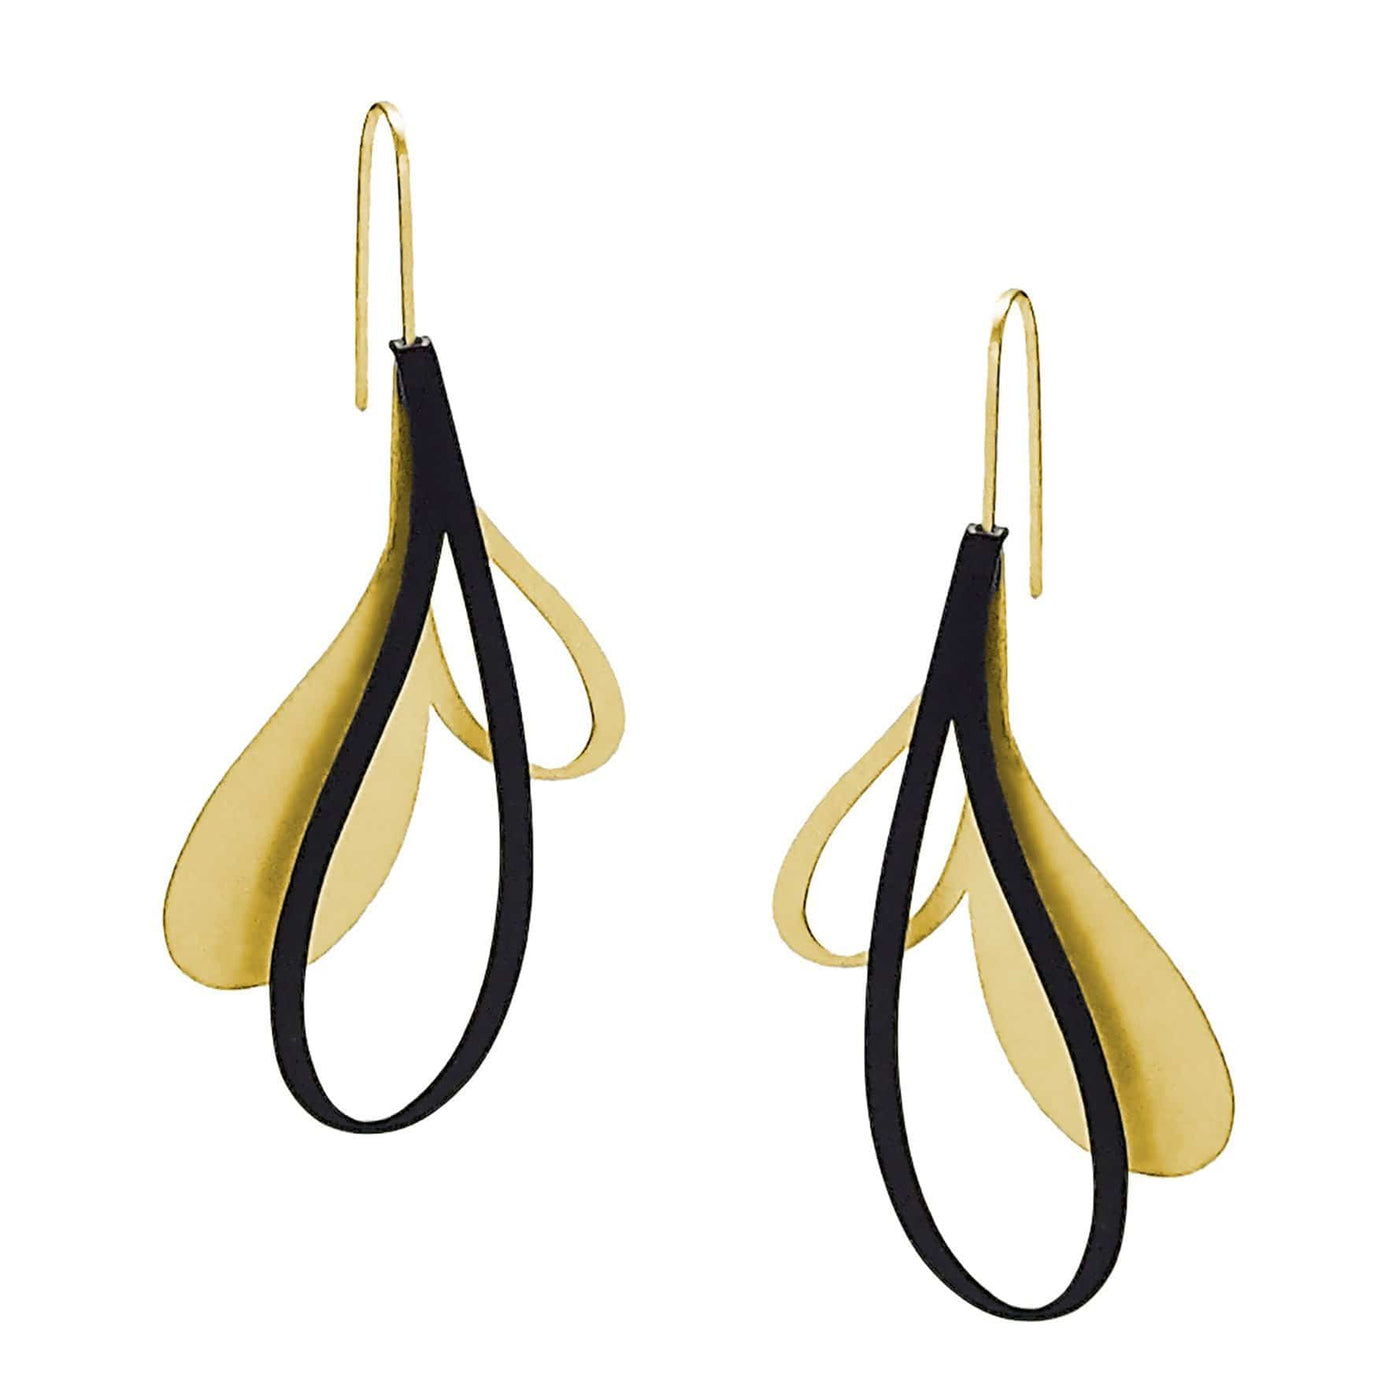 X2 Petal Earrings - Raw/ Black - inSync design